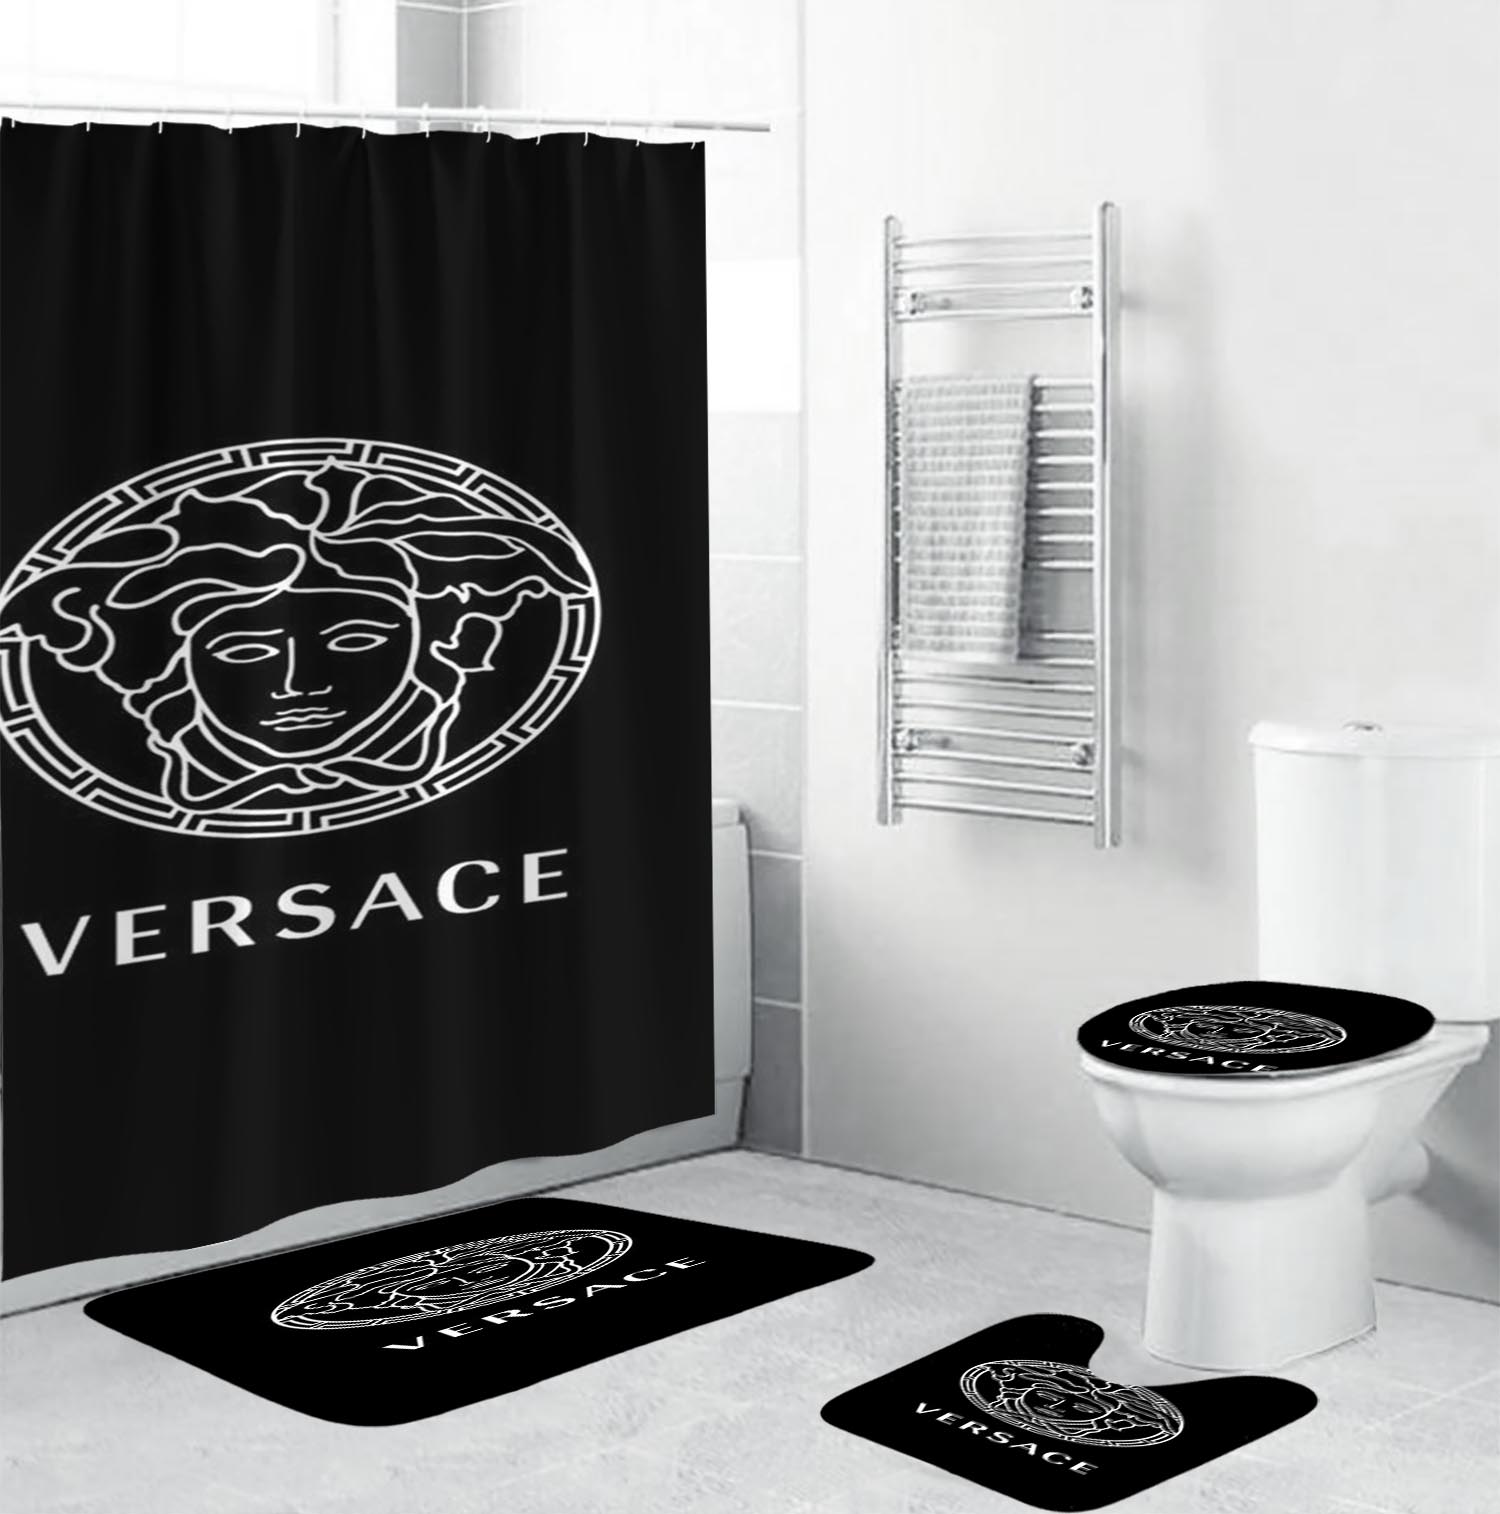 Versace Basic Big Whitein Black Bathroom Set Hypebeast Home Decor Luxury Fashion Brand Bath Mat